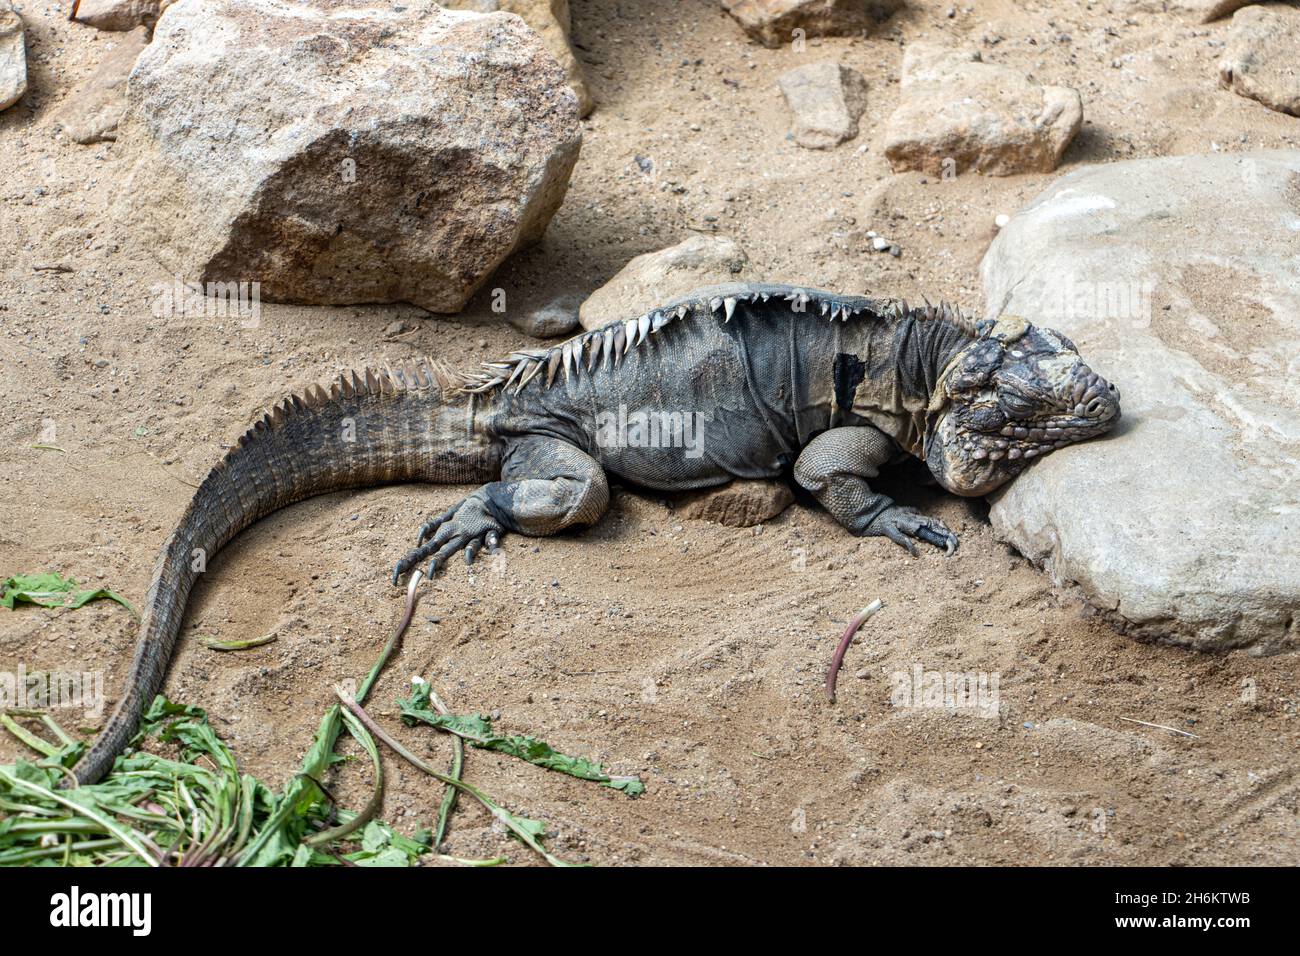 La iguana de roca cubana - iguana de tierra cubana (Cyclura nubila) está descansando sobre un suelo Foto de stock